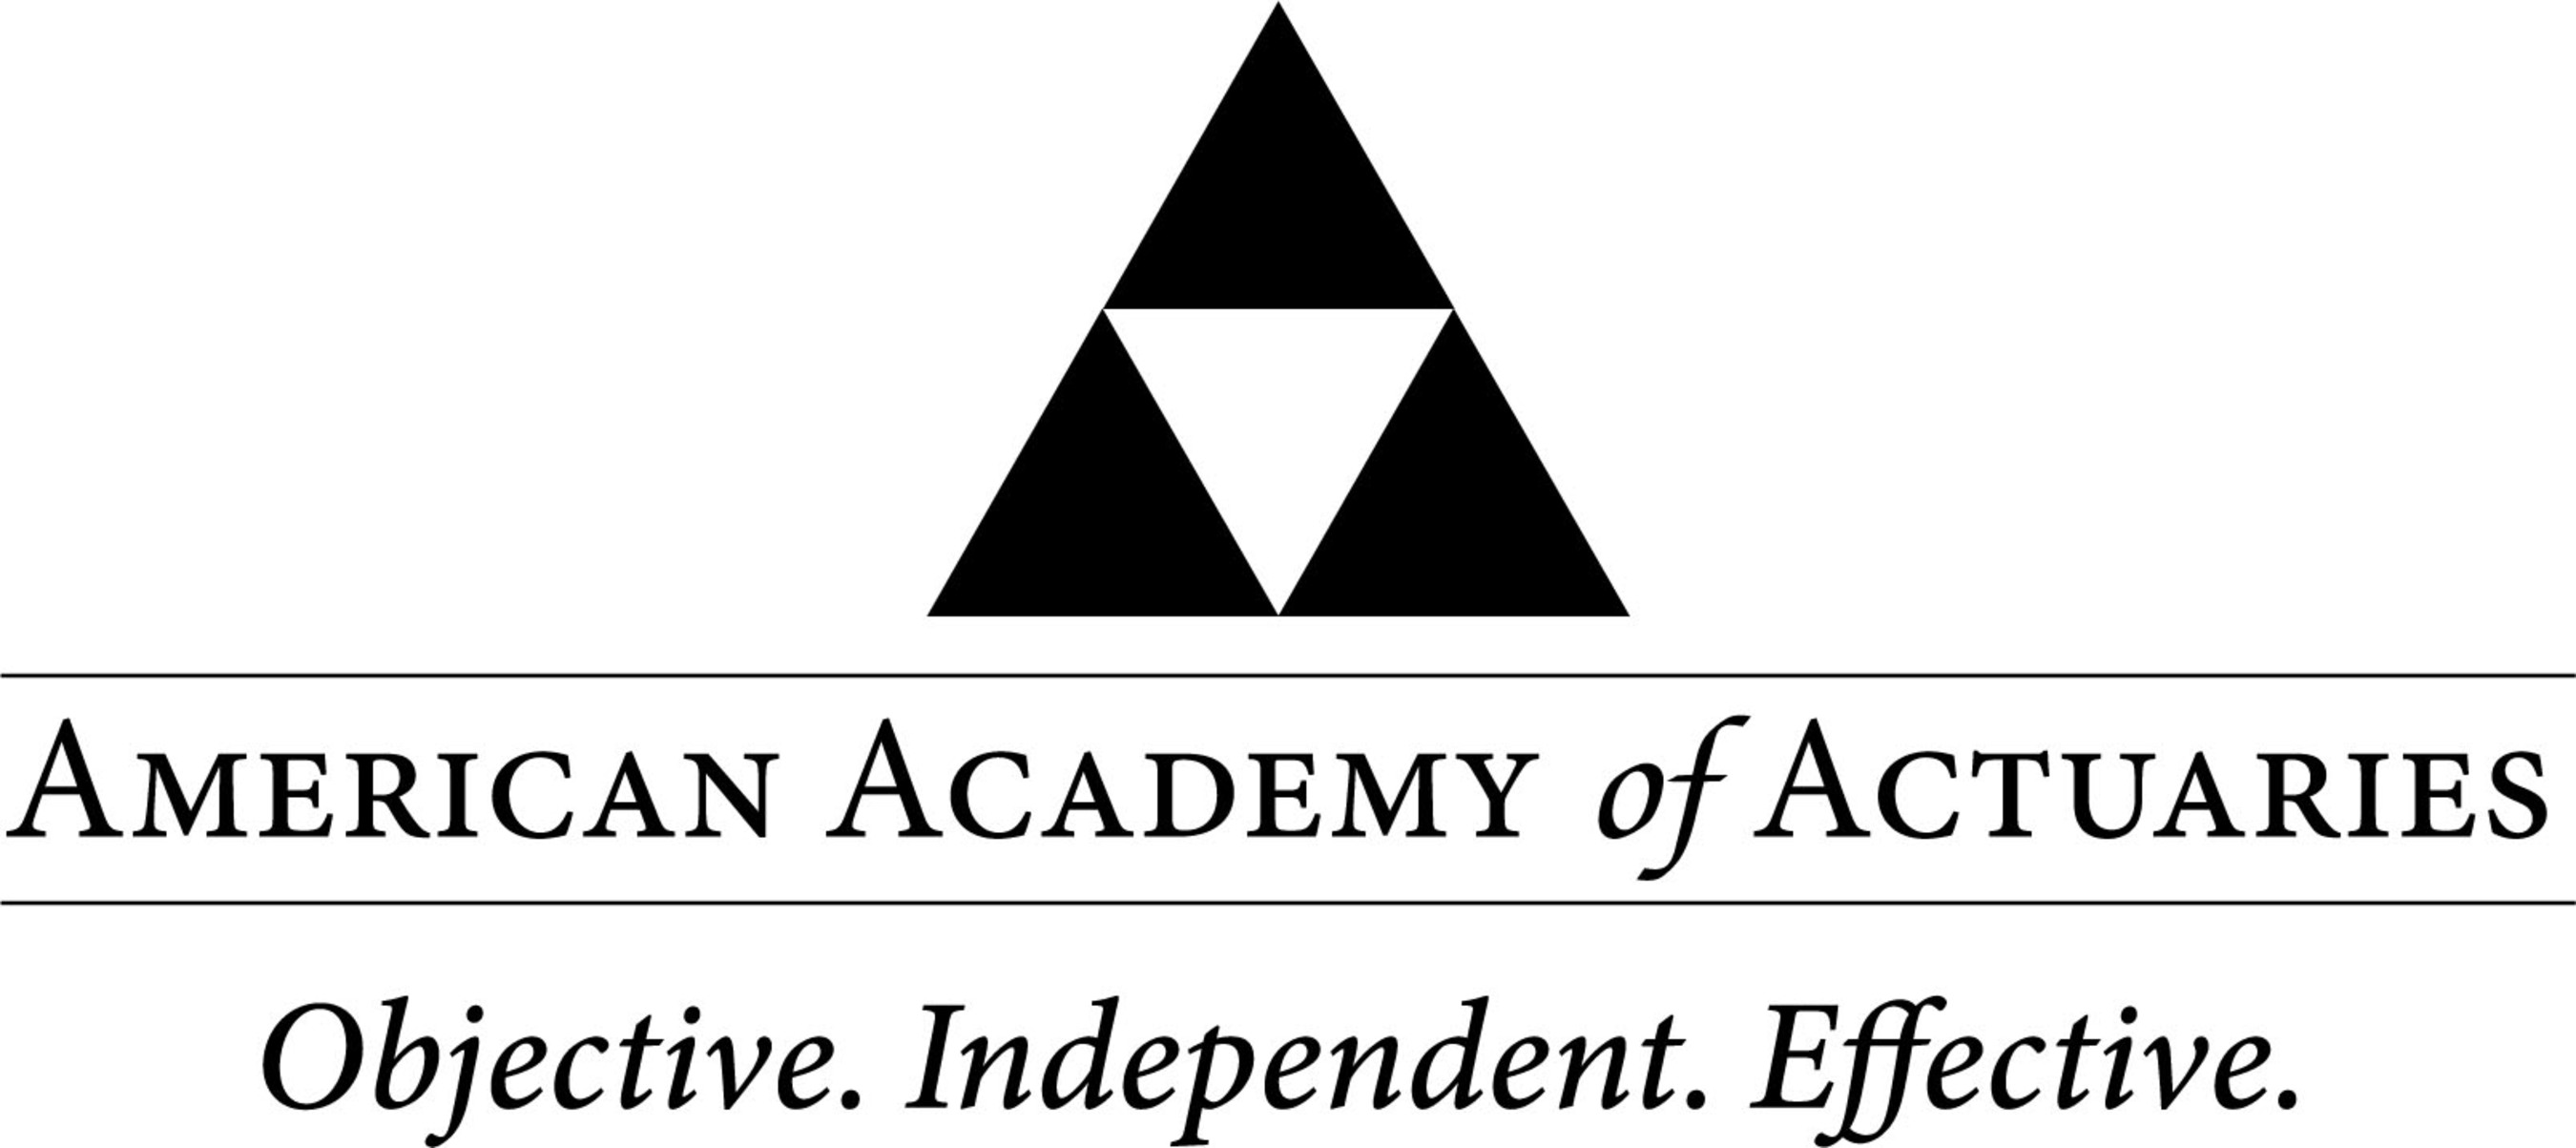 American Academy of Actuaries logo